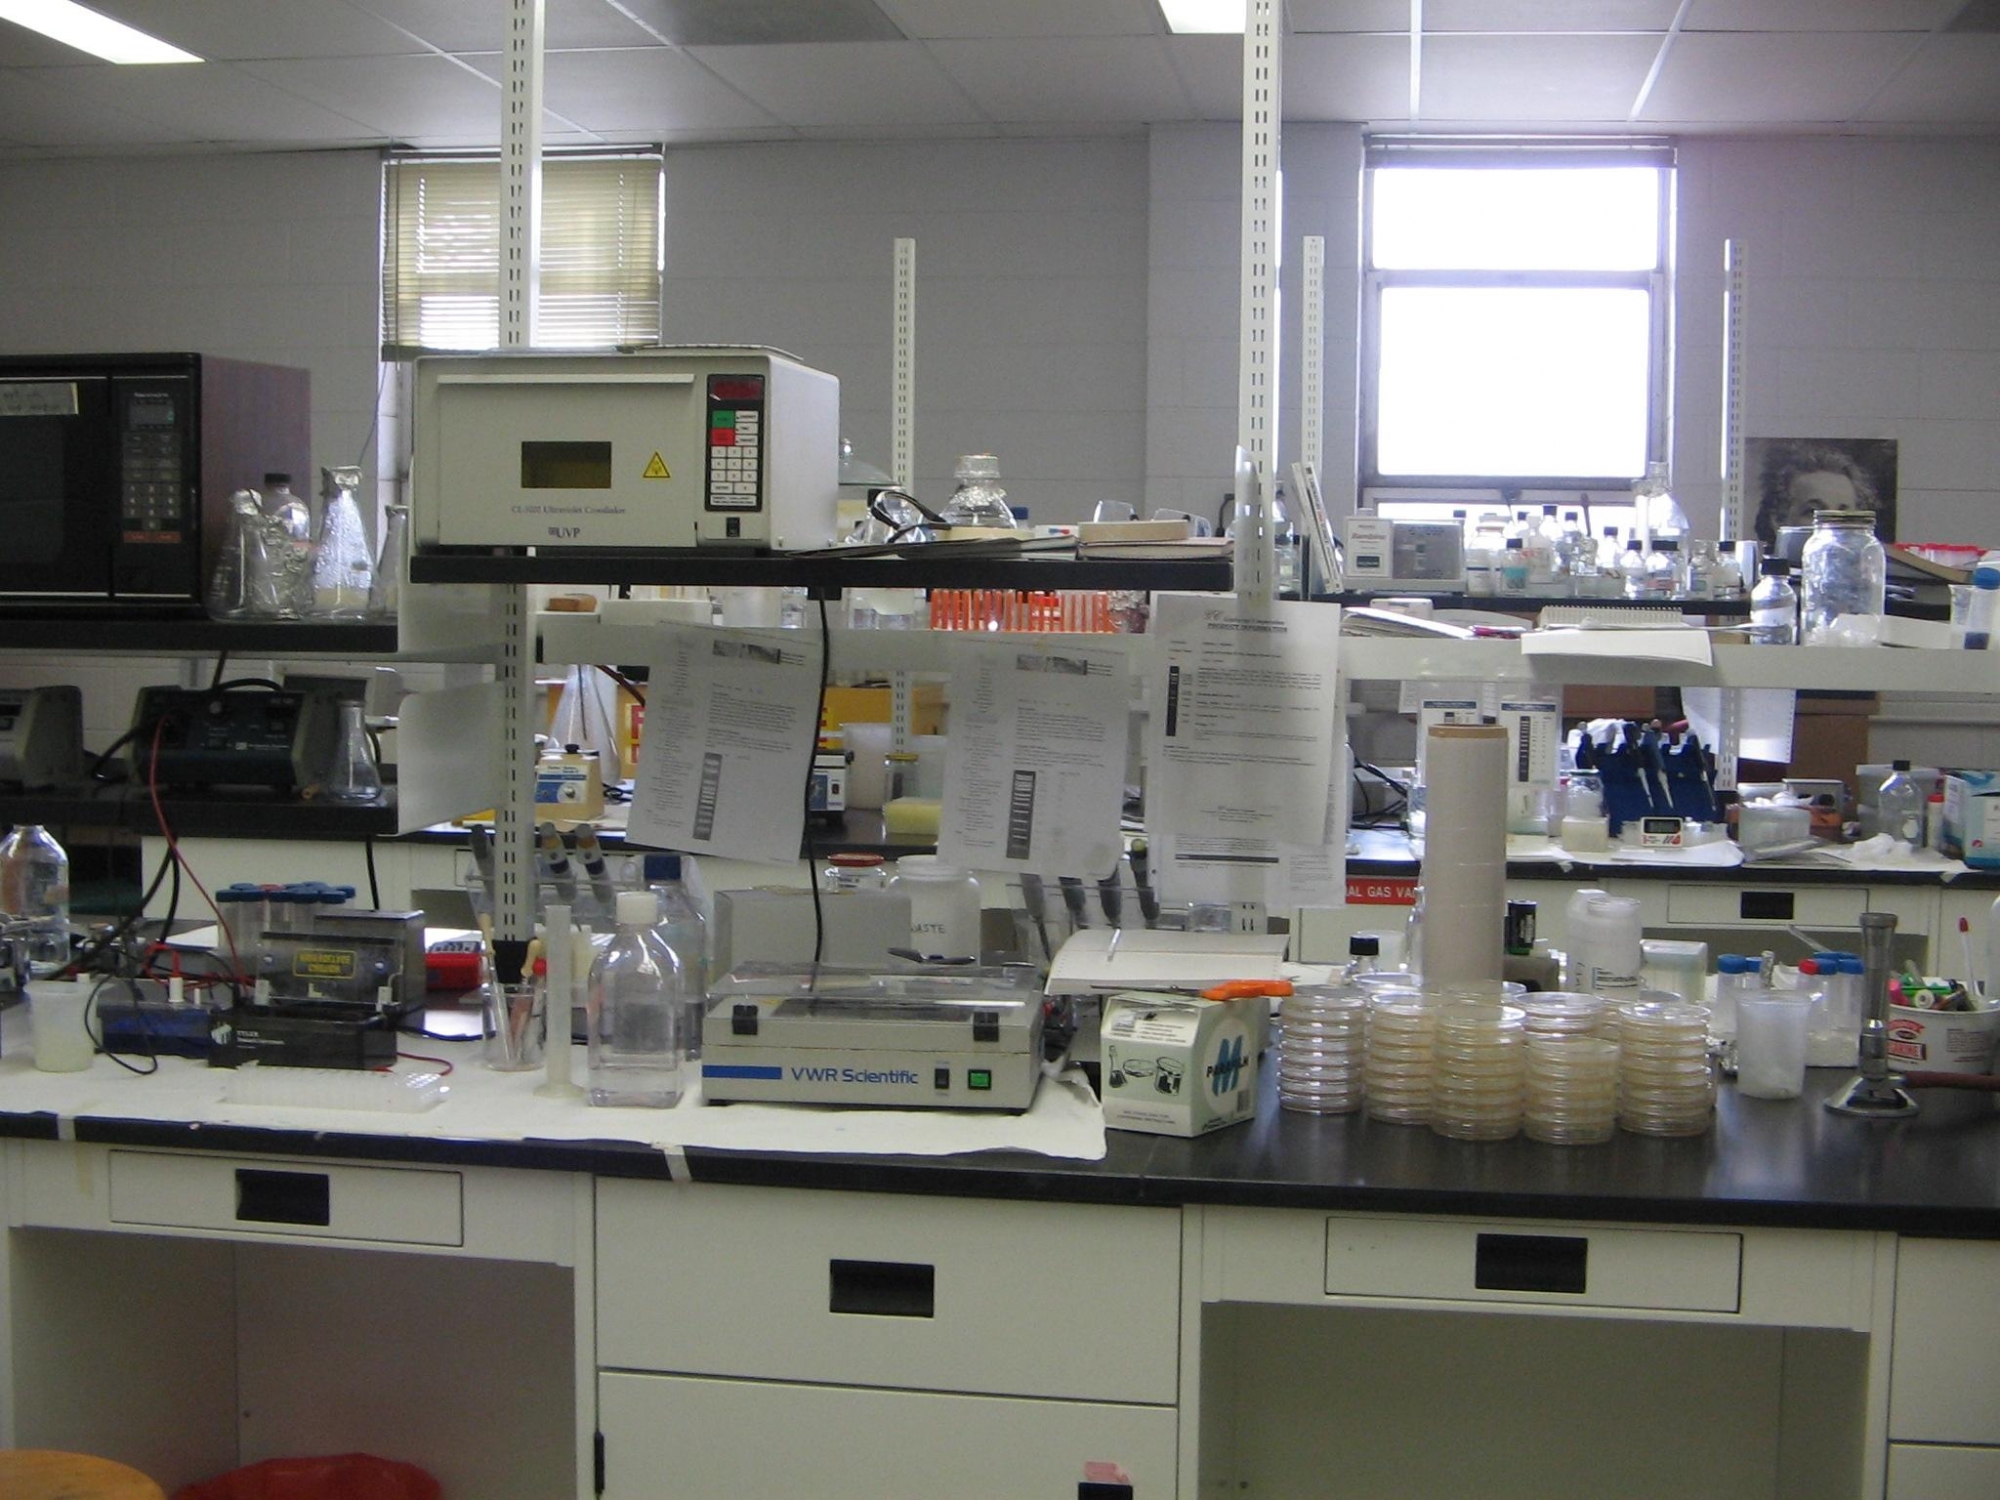 Second image of lab